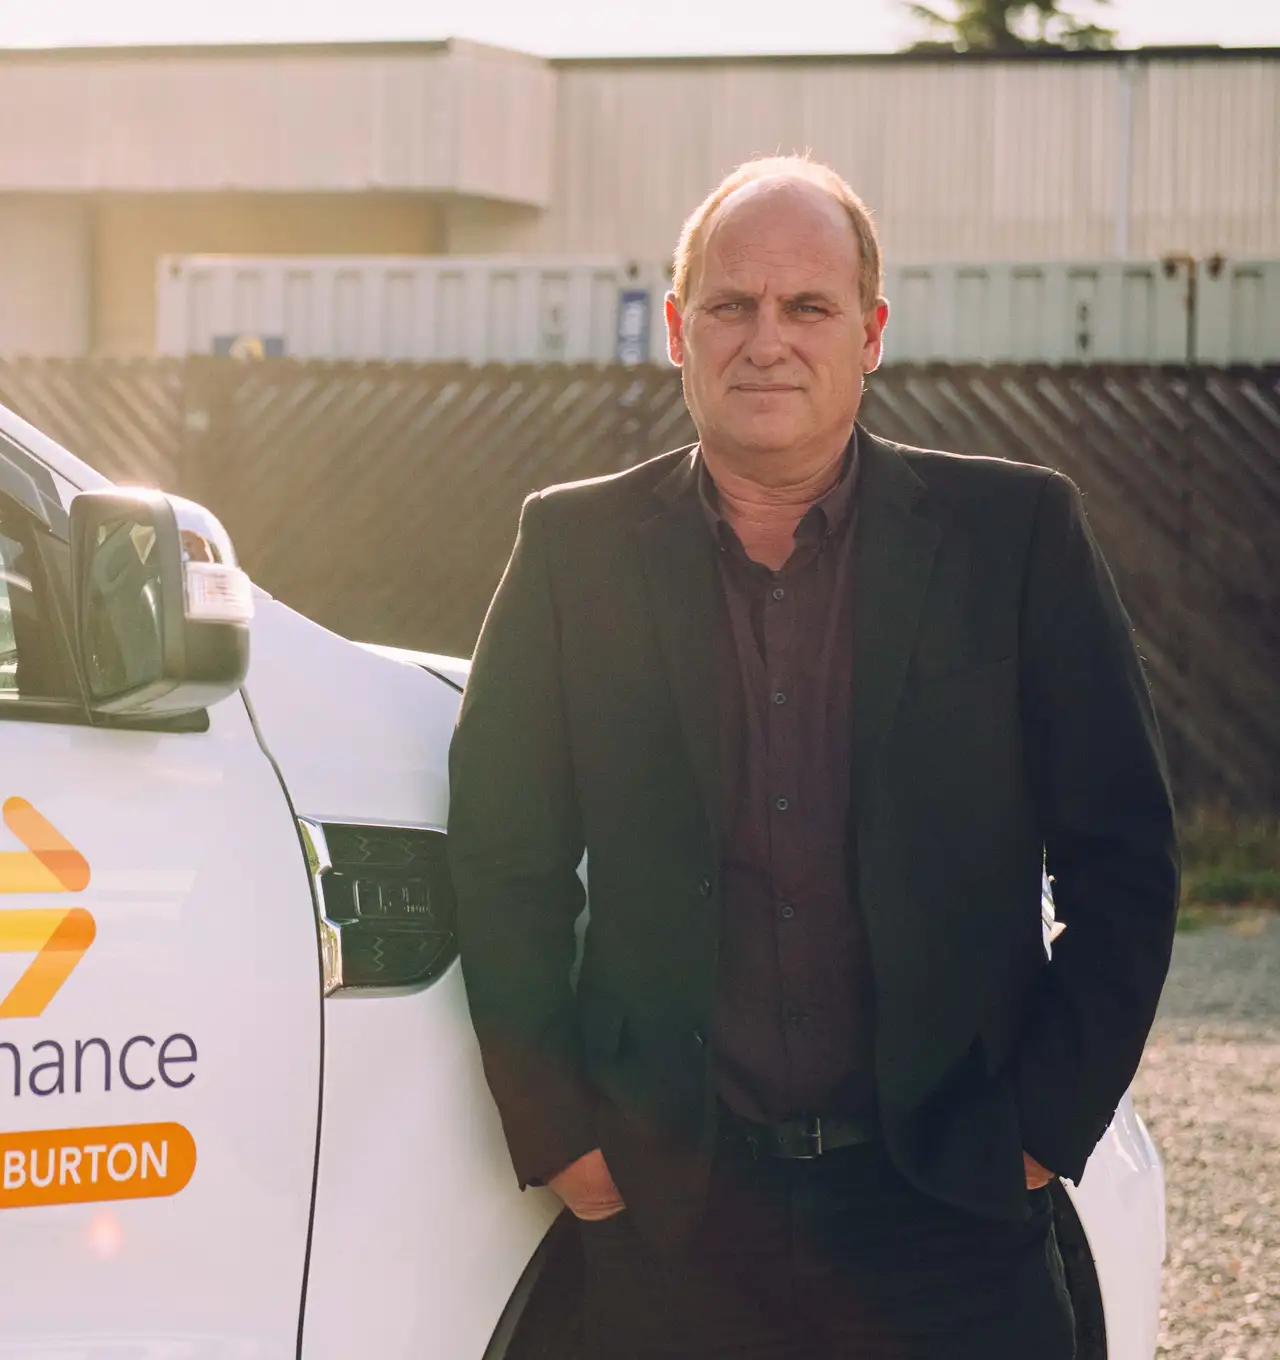 Leon Cameron from MTF Finance Ashburton standing beside a company vehicle